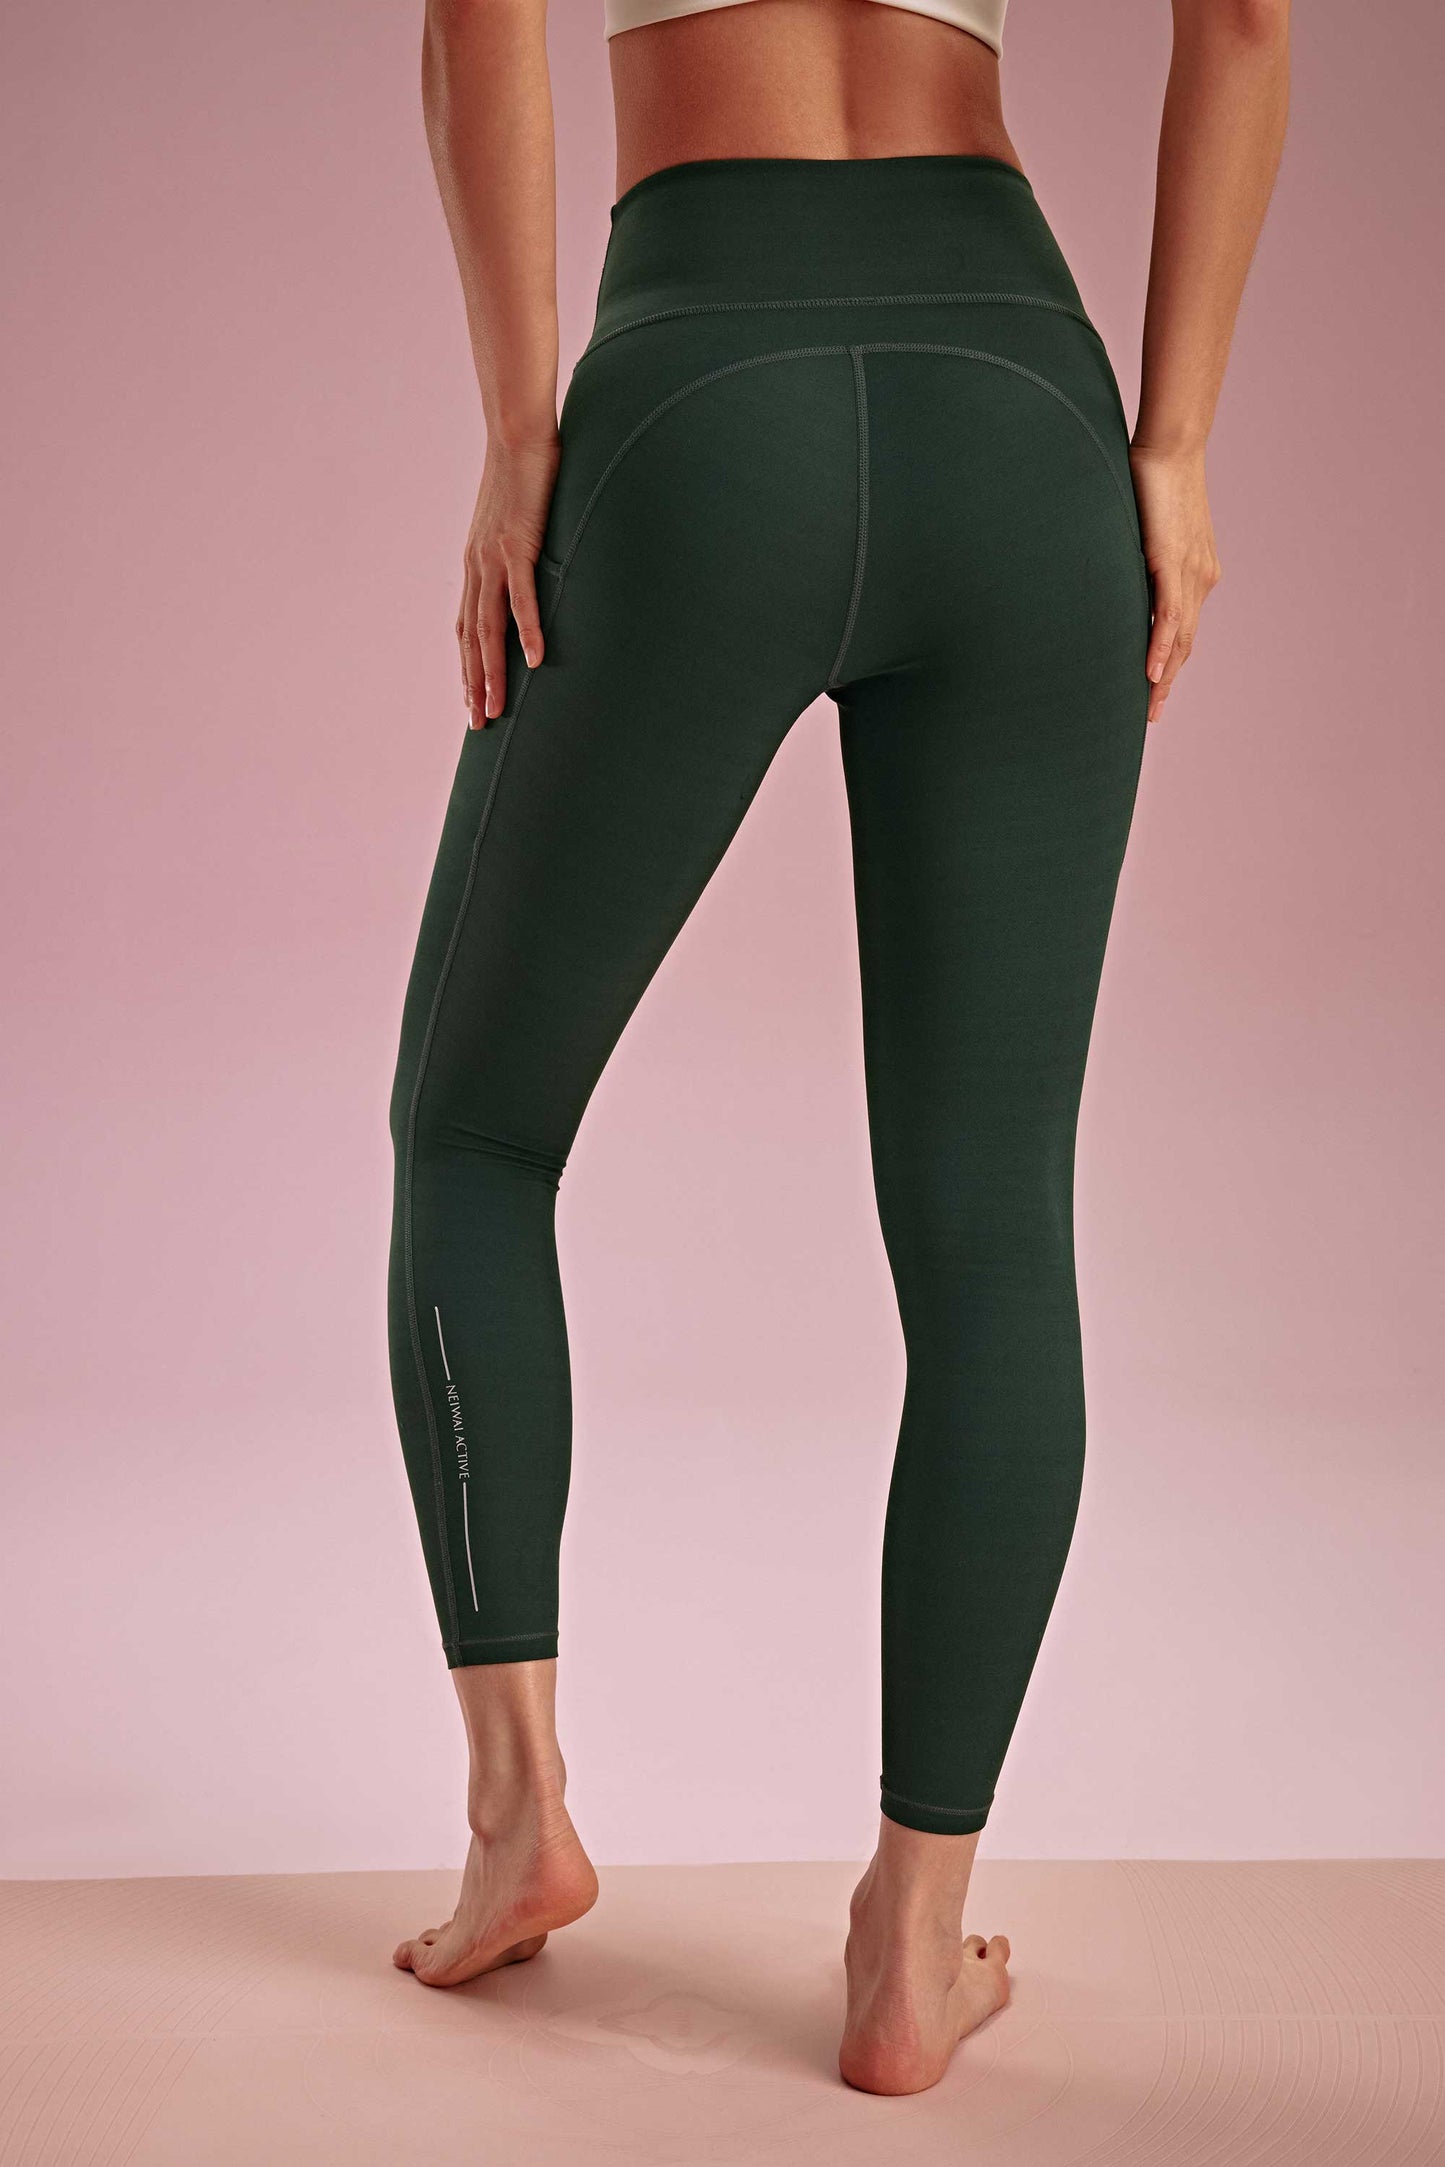 back of a woman wearing a green leggings